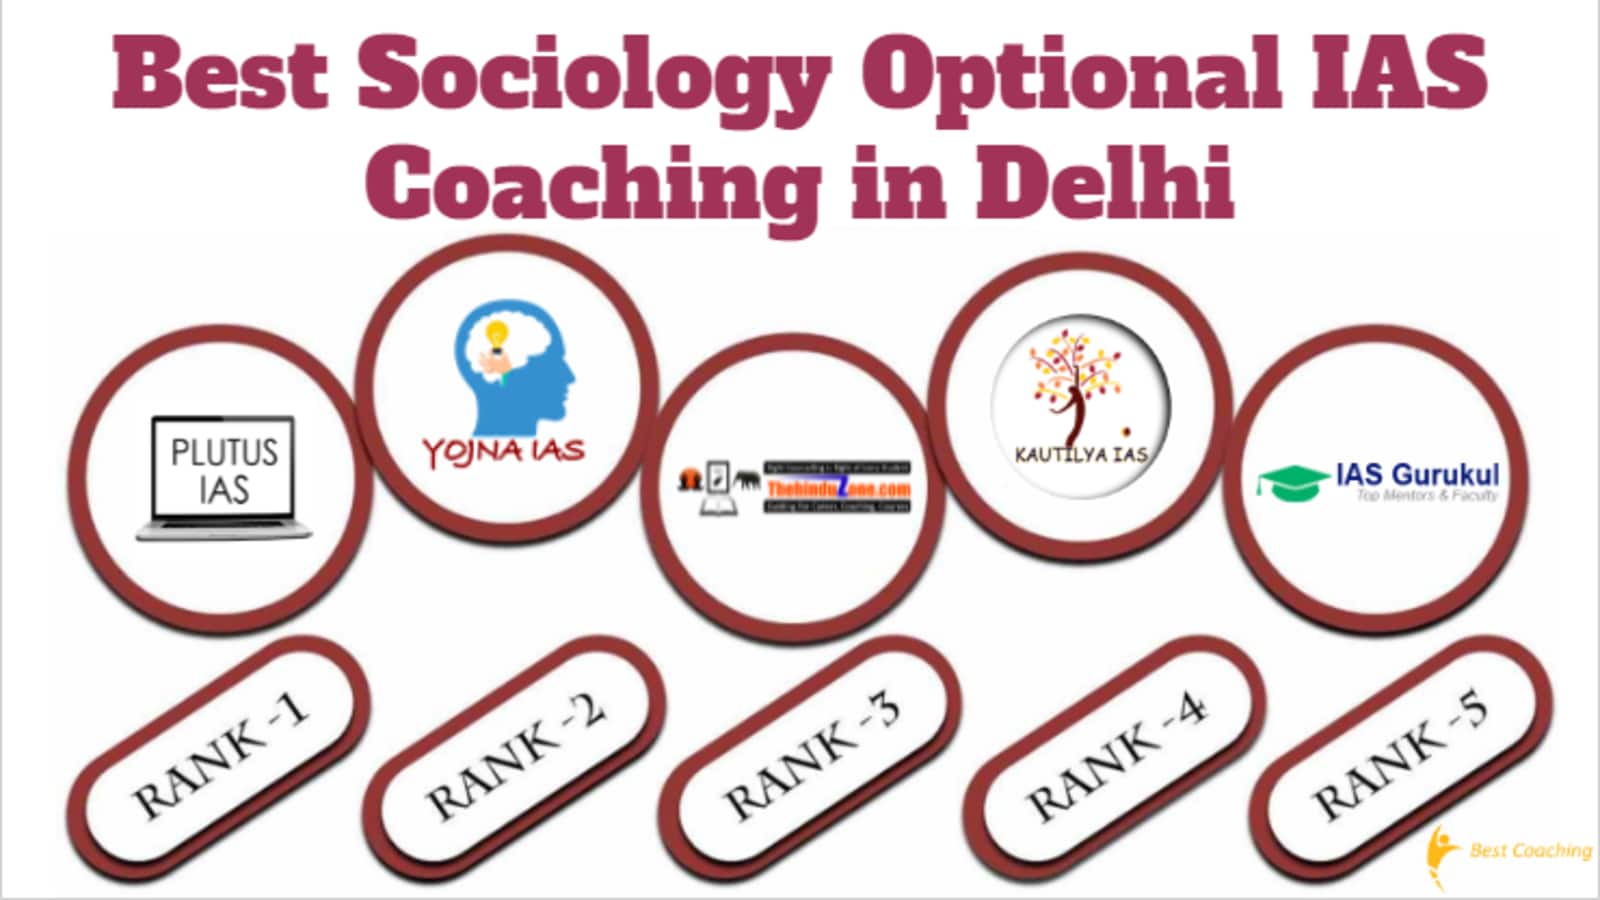 Top Sociology Optional IAS Coaching in Delhi